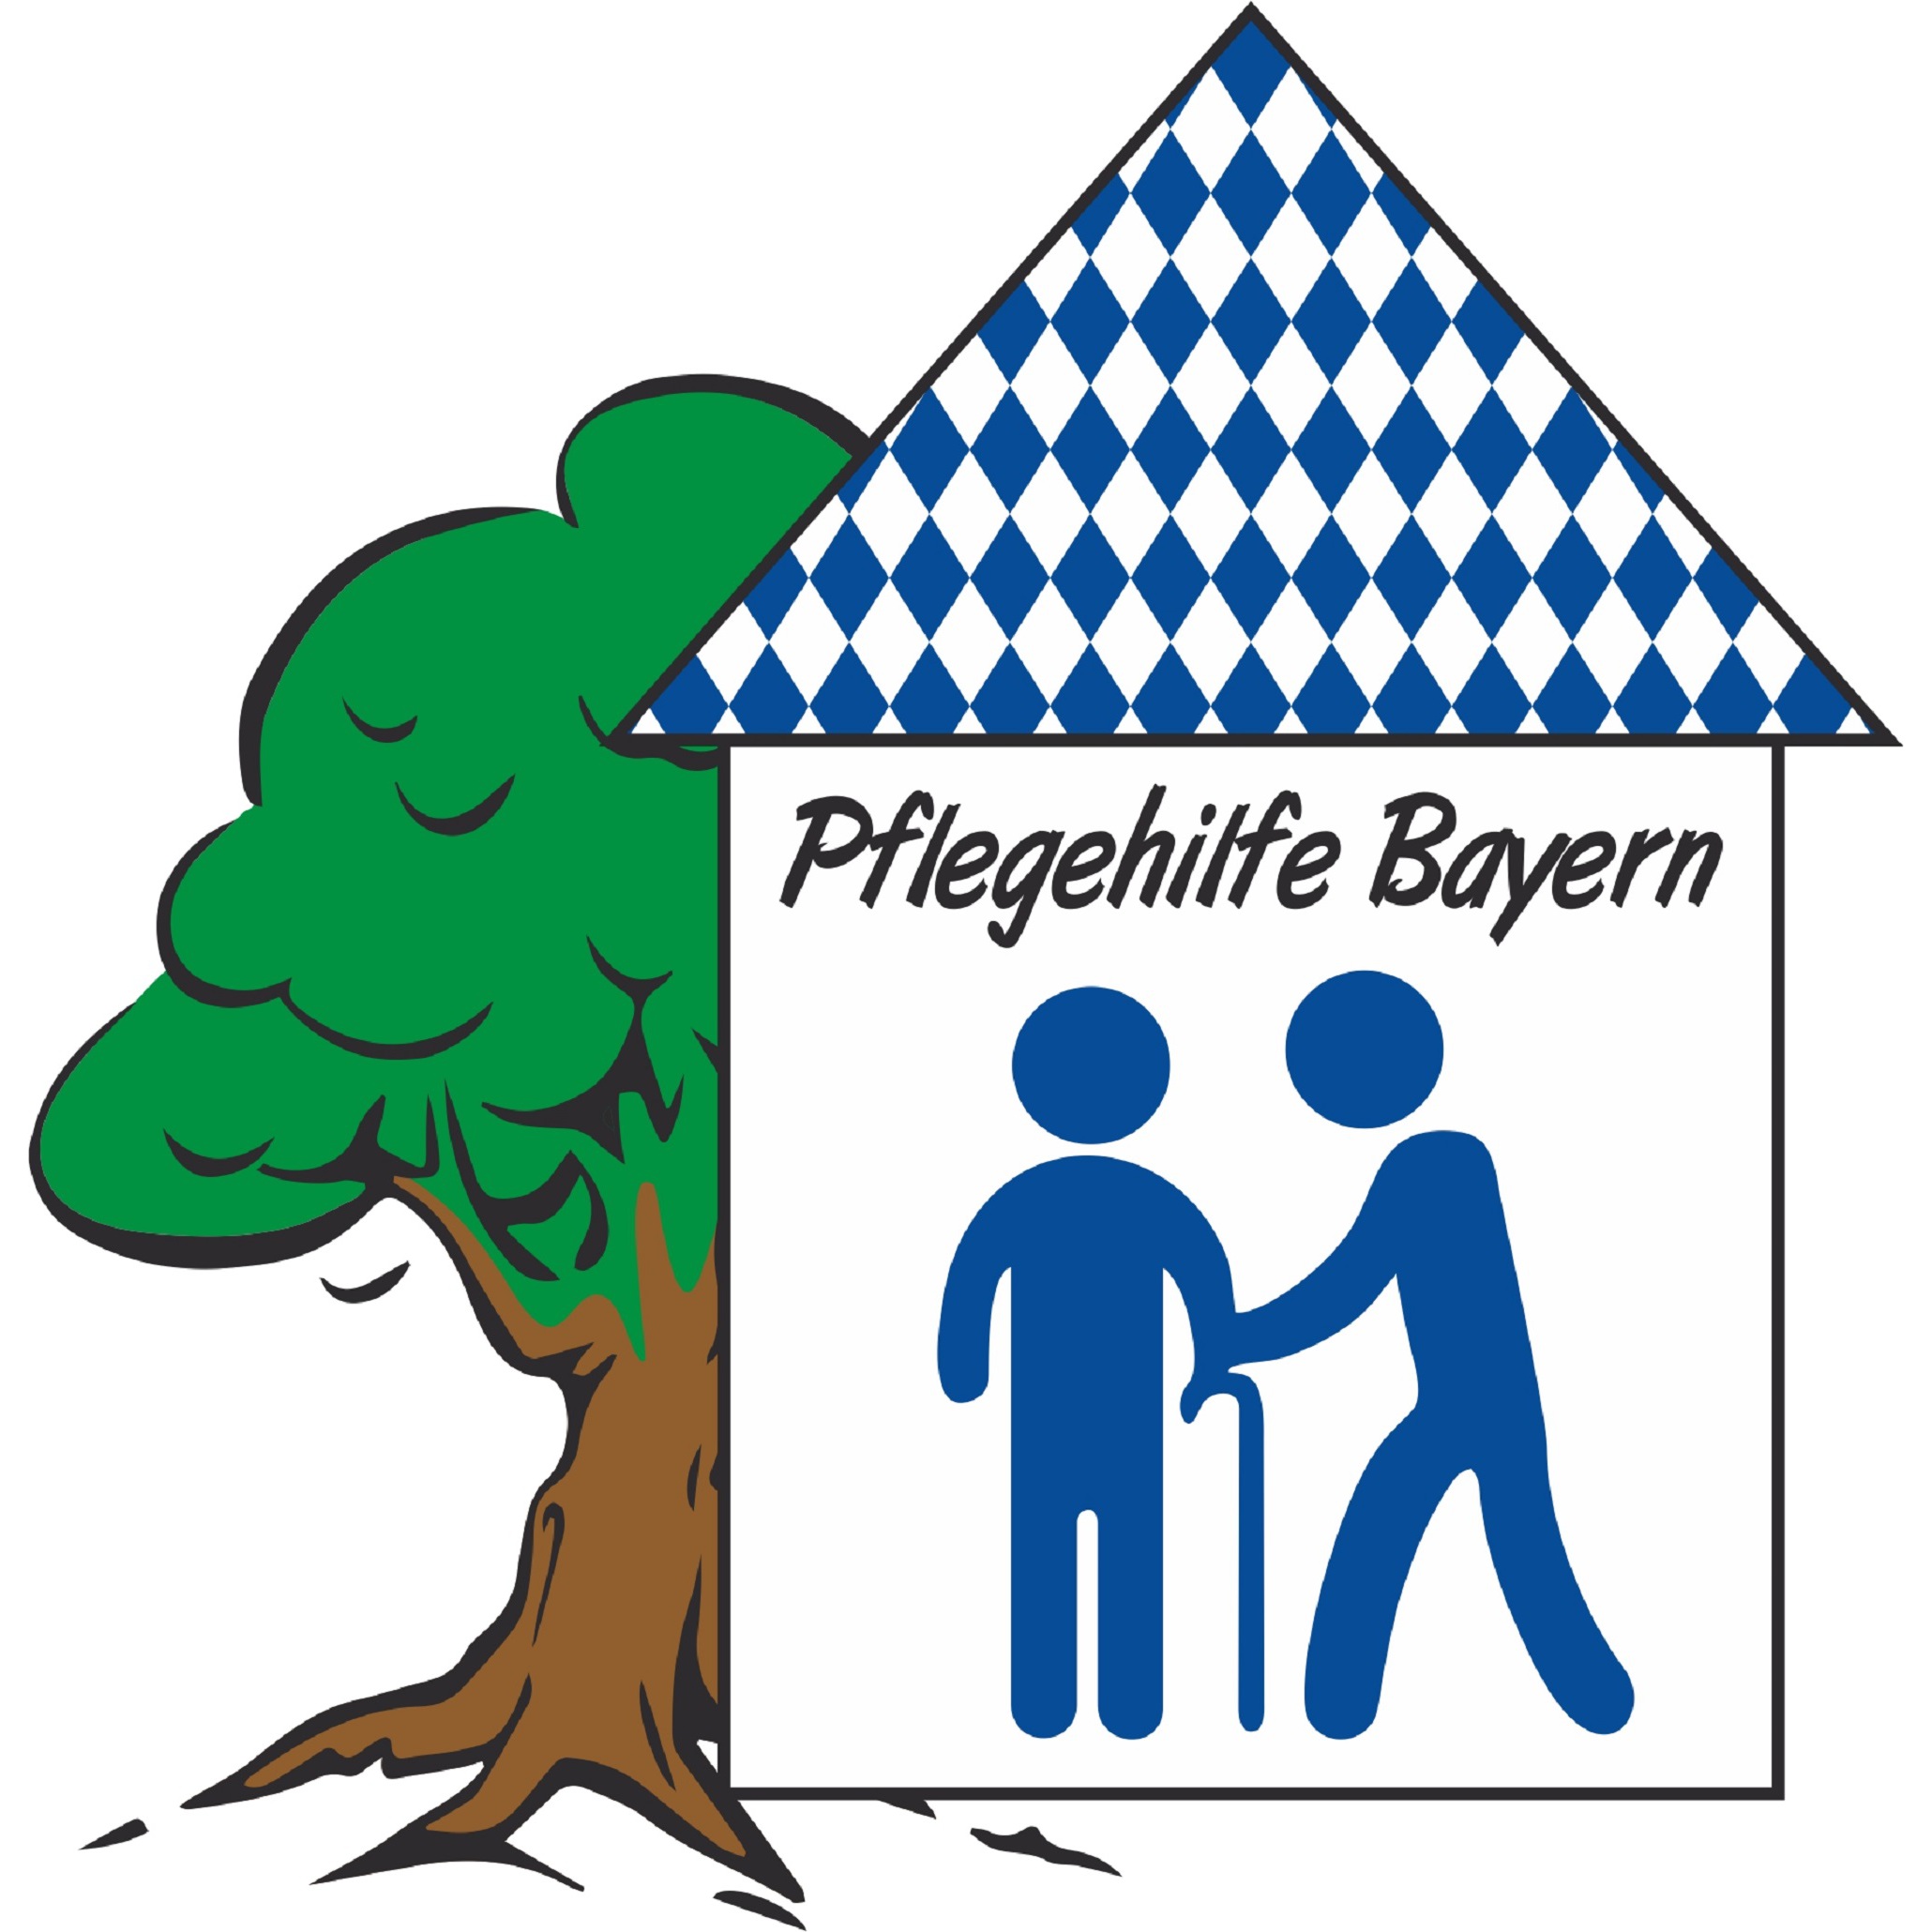 Pflegehilfe Bayern in Runding - Logo